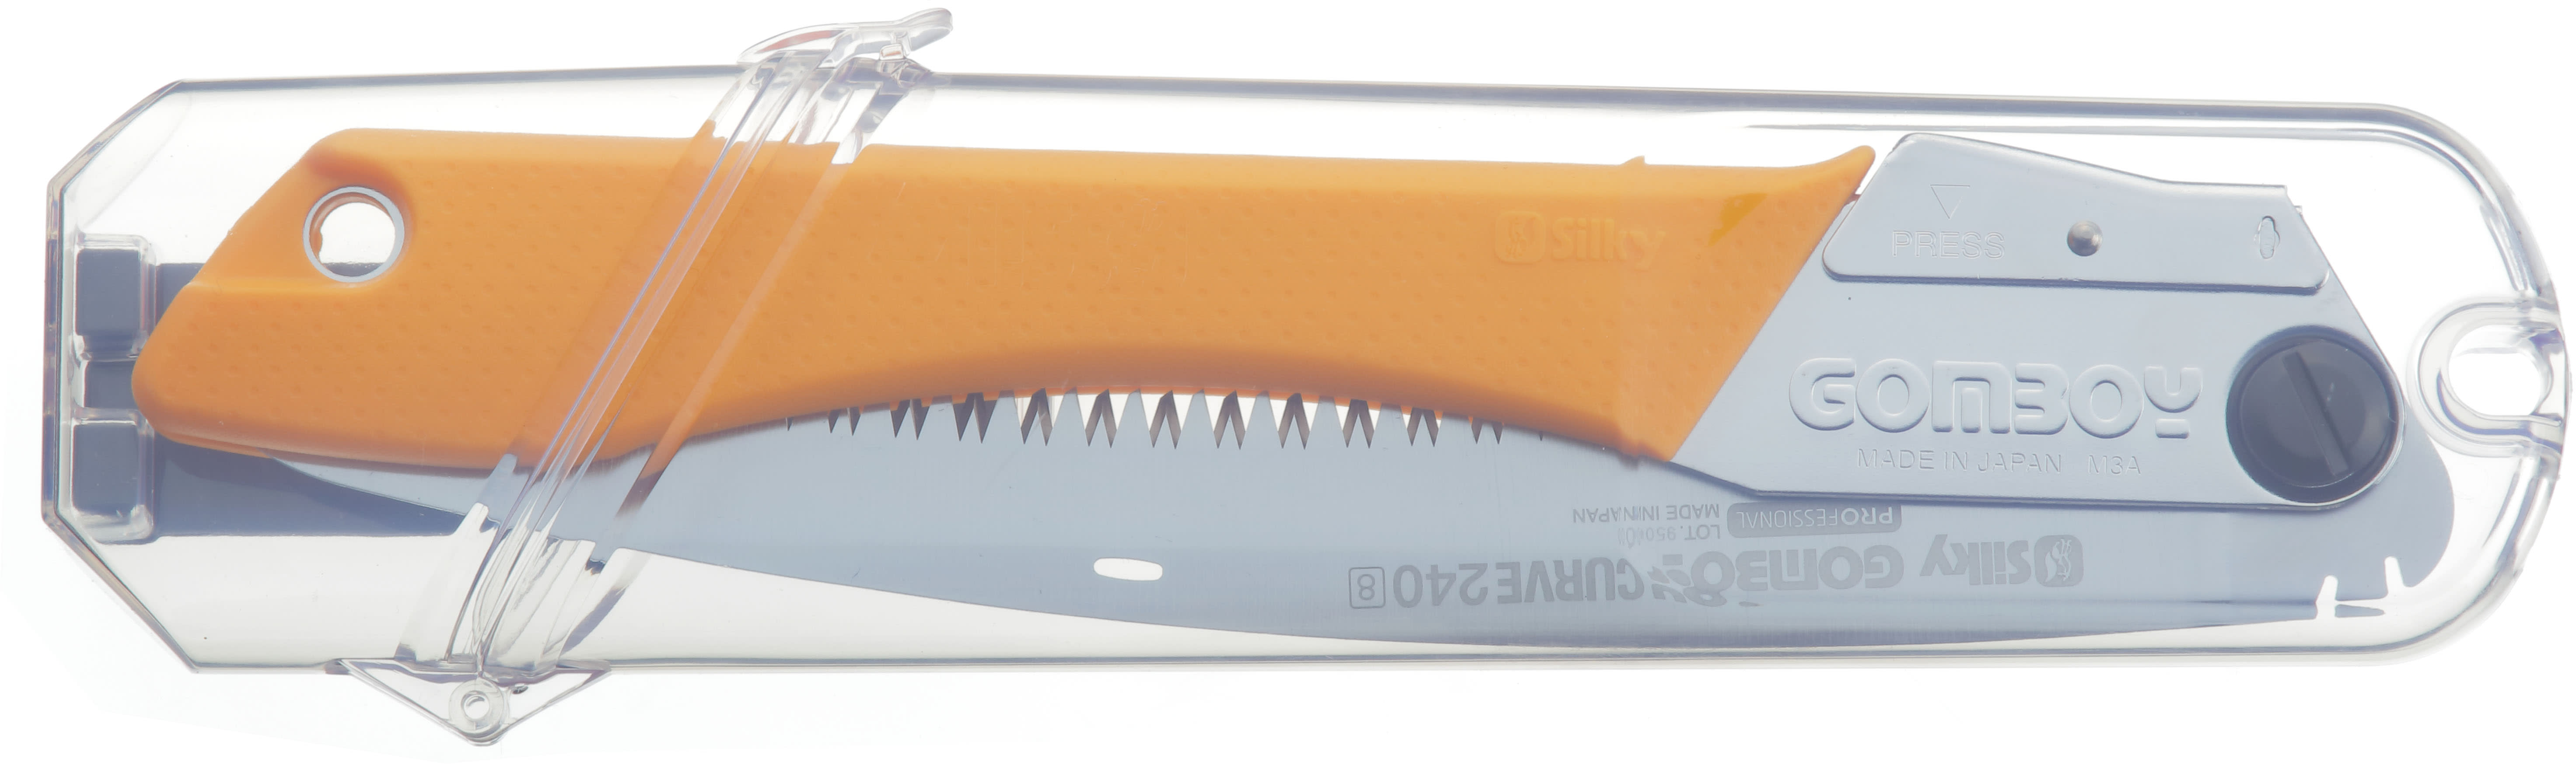 Silky® Gomboy Curve 240mm Saw - Large Teeth